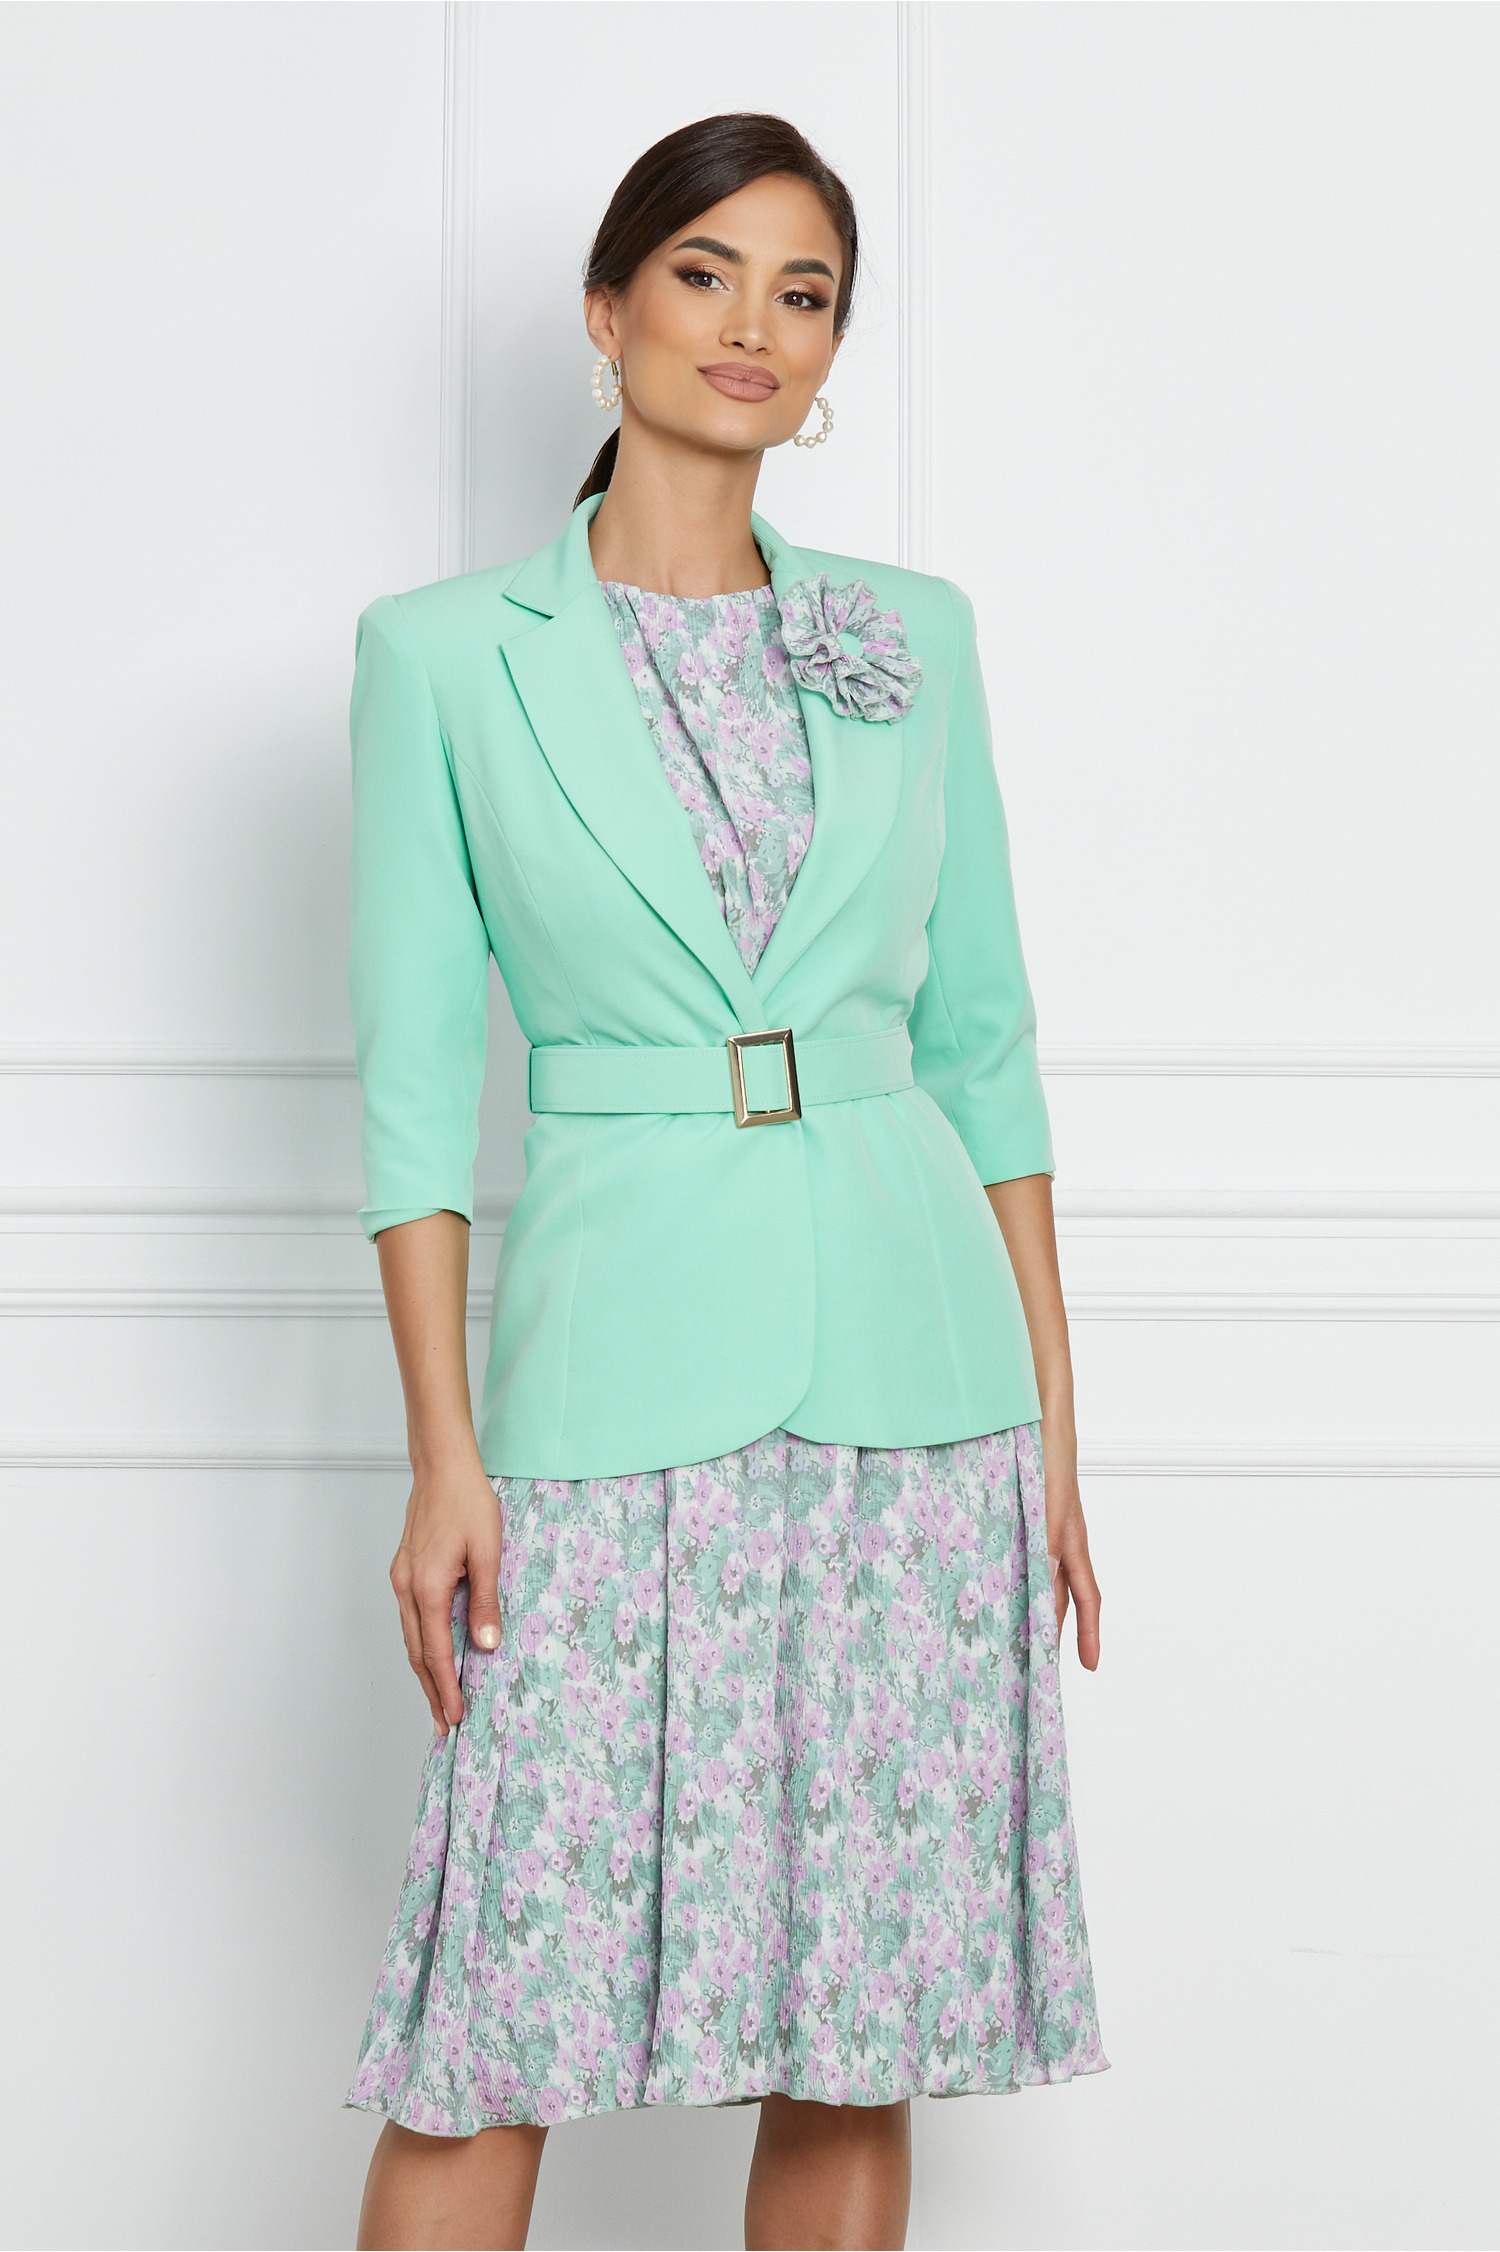 Poze Compleu Dy Fashion verde mint cu sacou si rochie cu flori dyfashion.ro